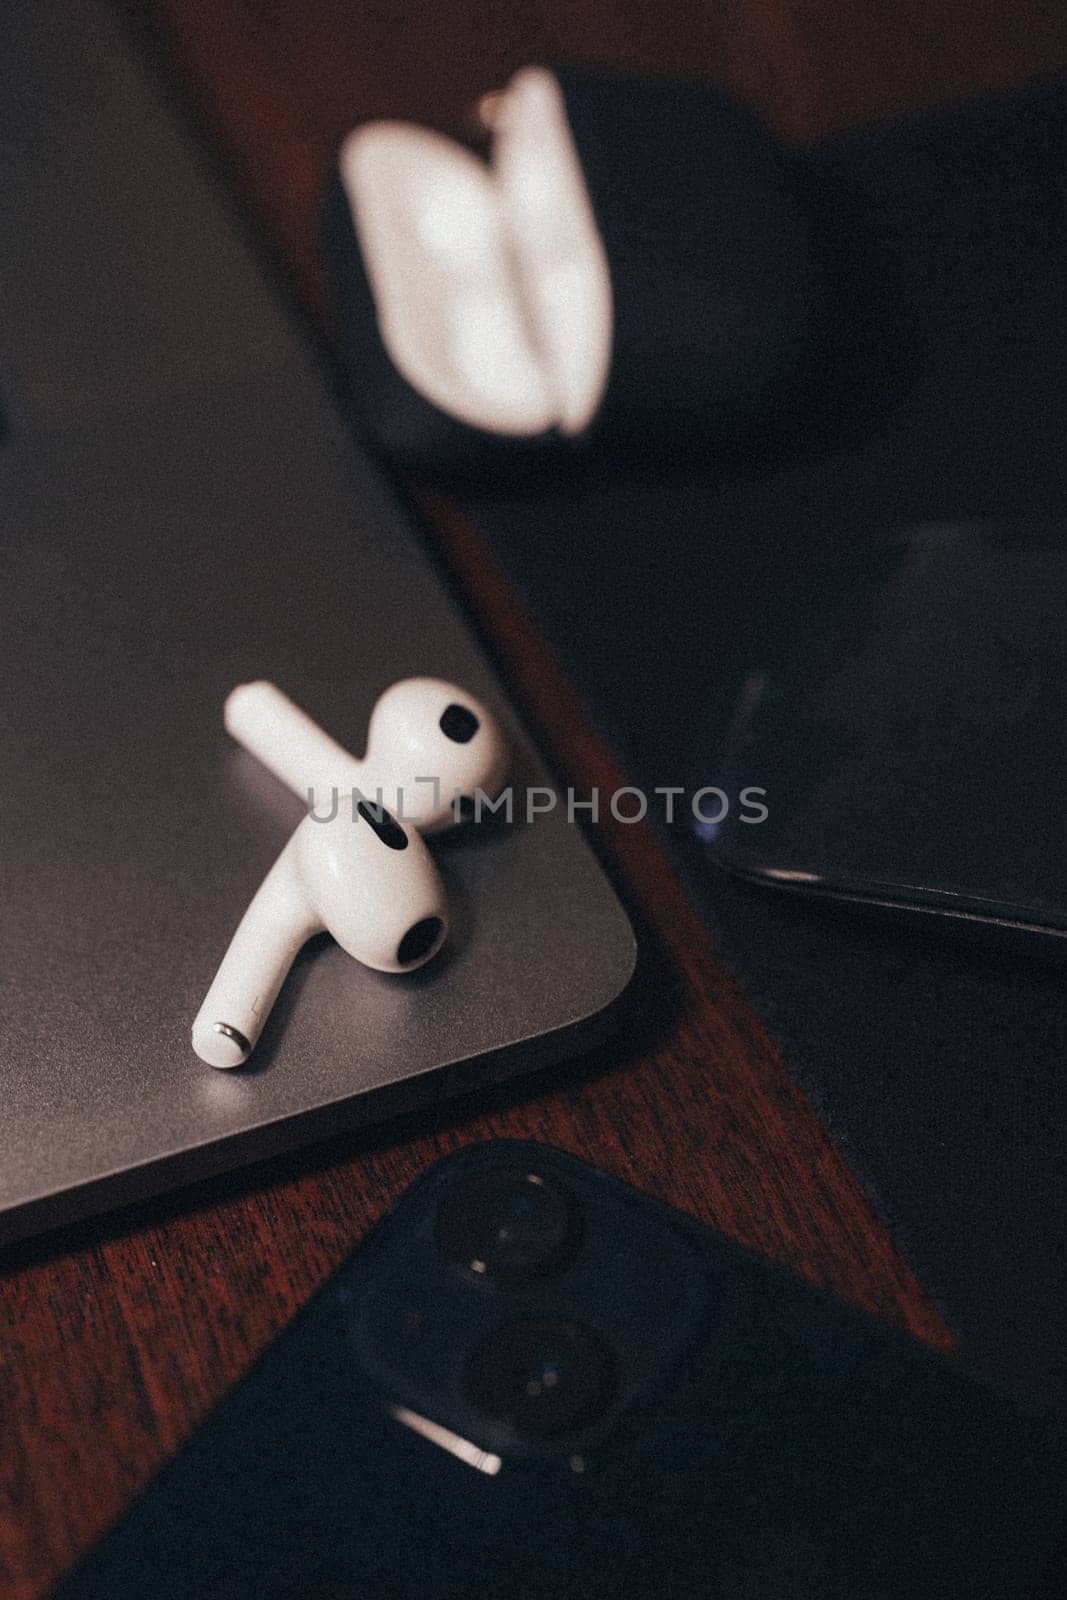 Elegant wireless earphones on top of a laptop. by Pukhovskiy